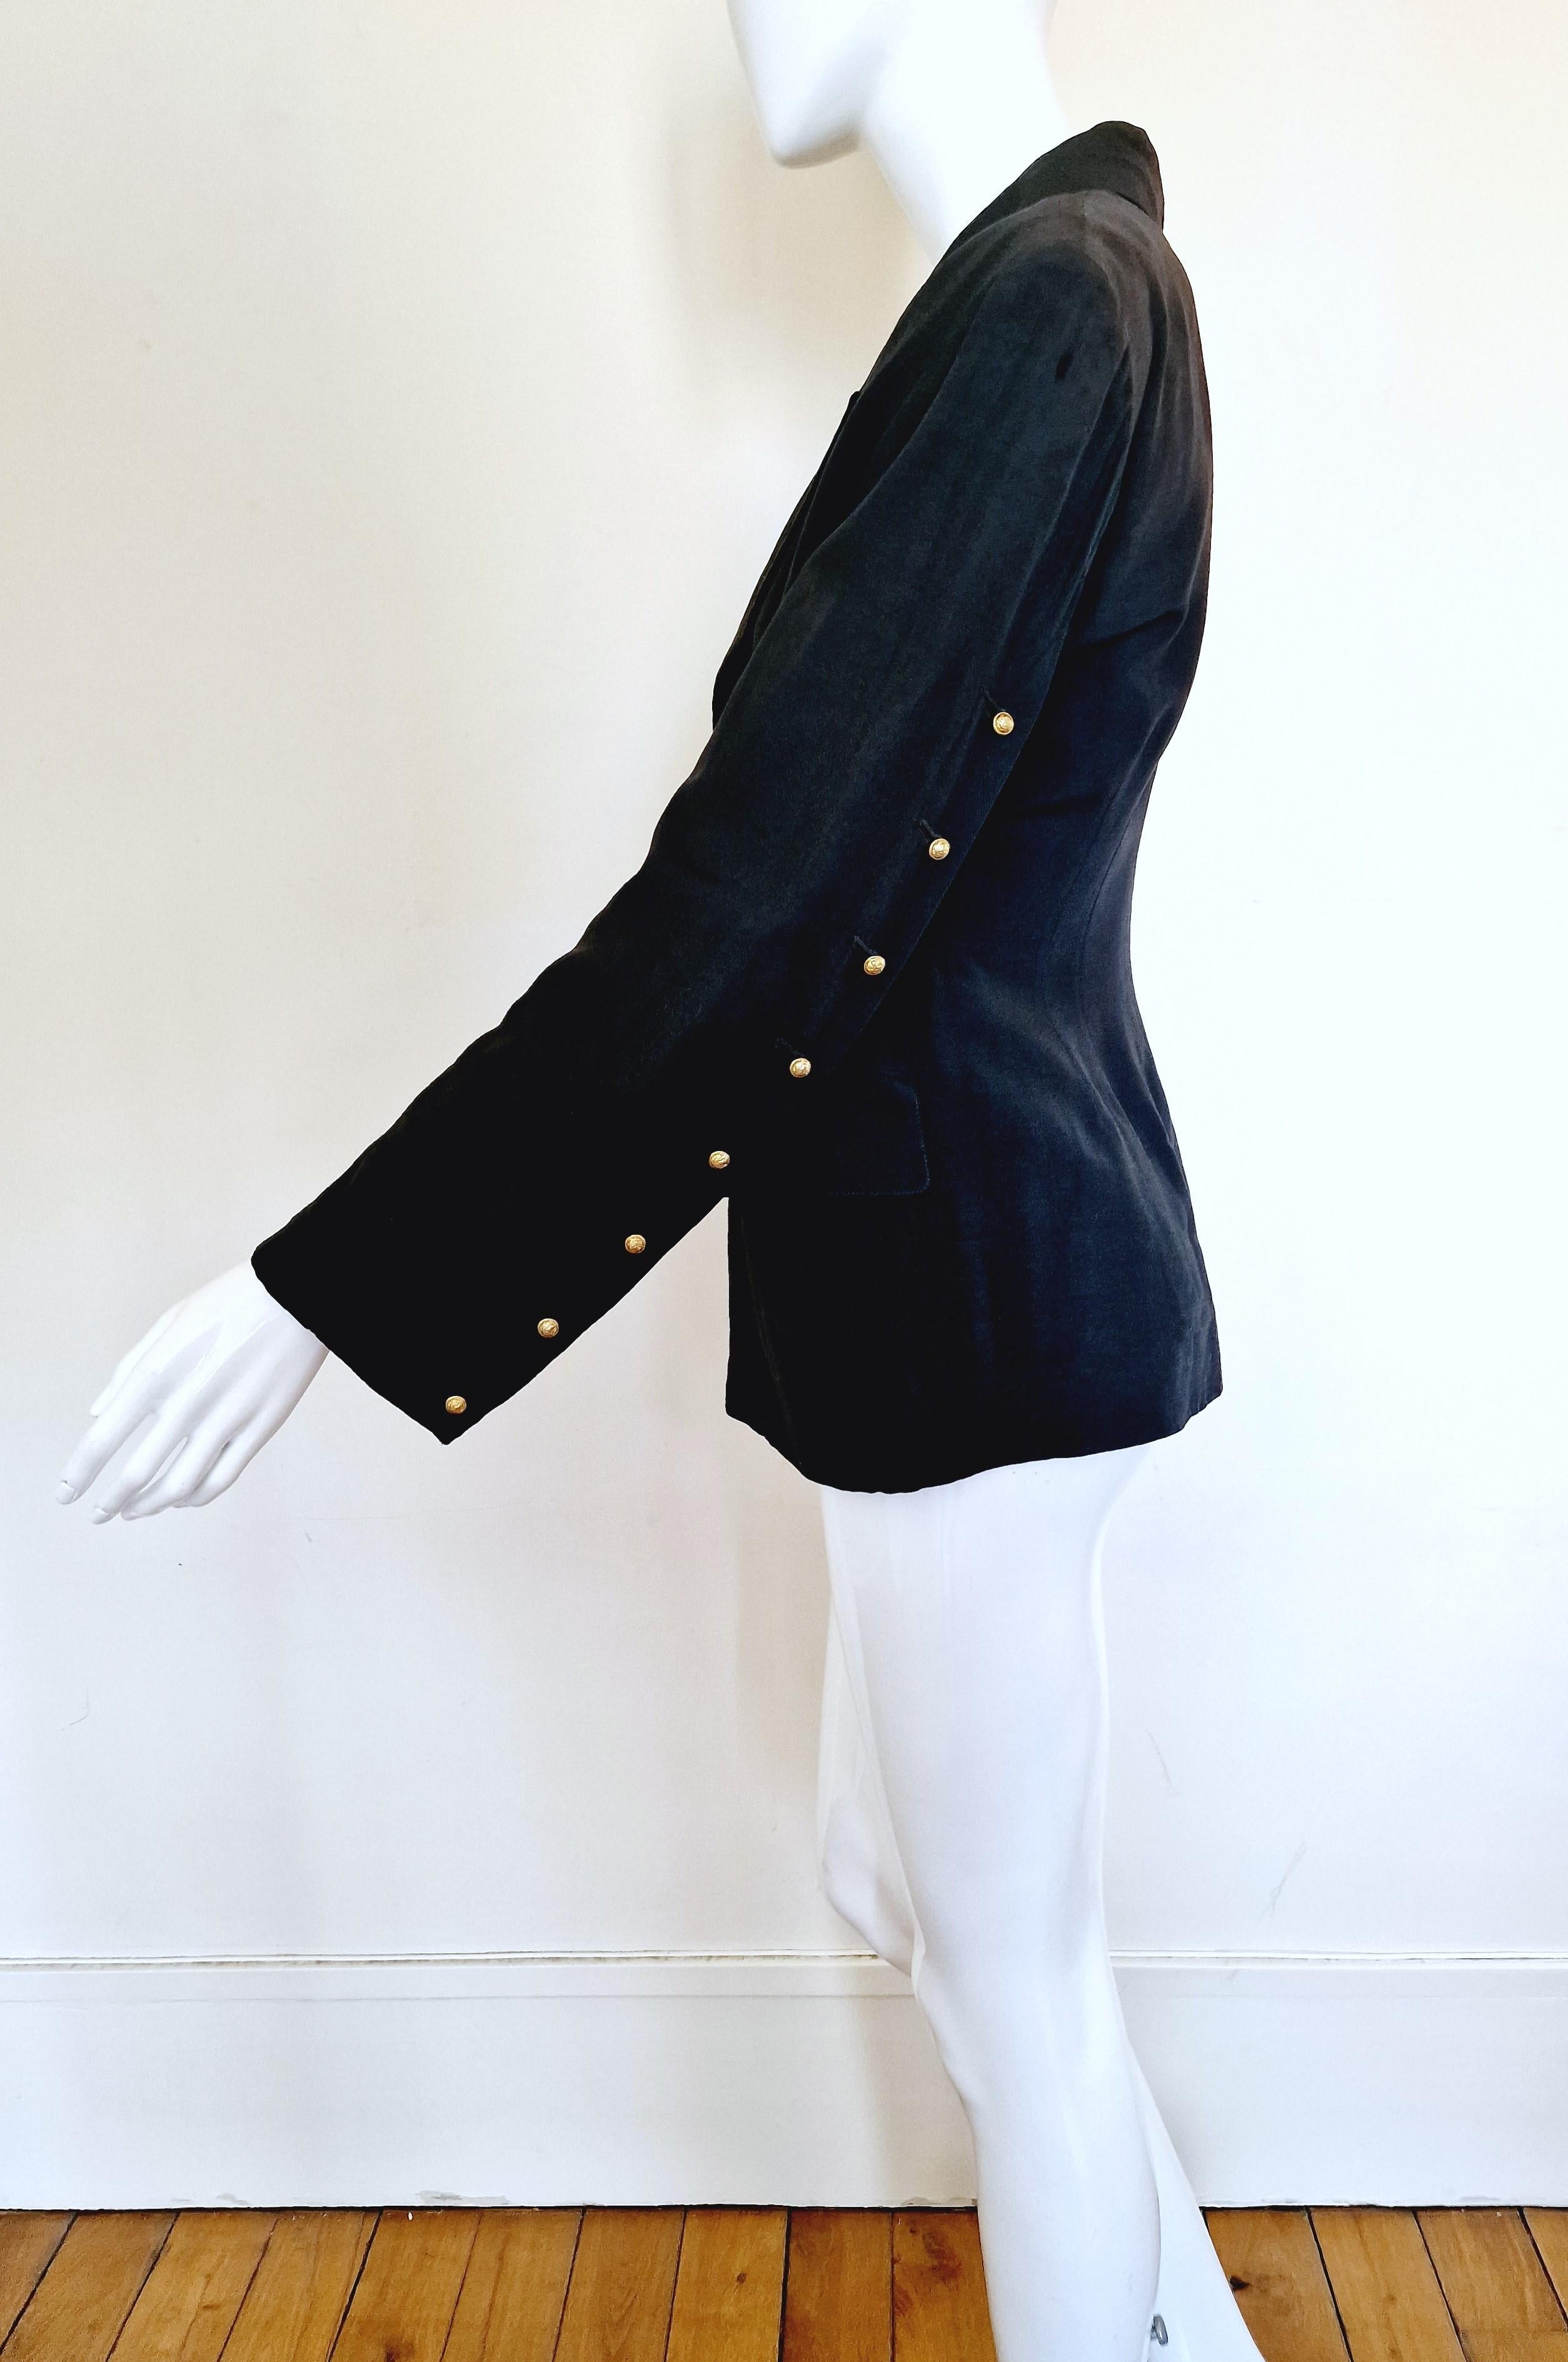 John Galliano Plein Sud 1990 S/S Les Gitans Runway Vintage Dior Blazer Jacket For Sale 5